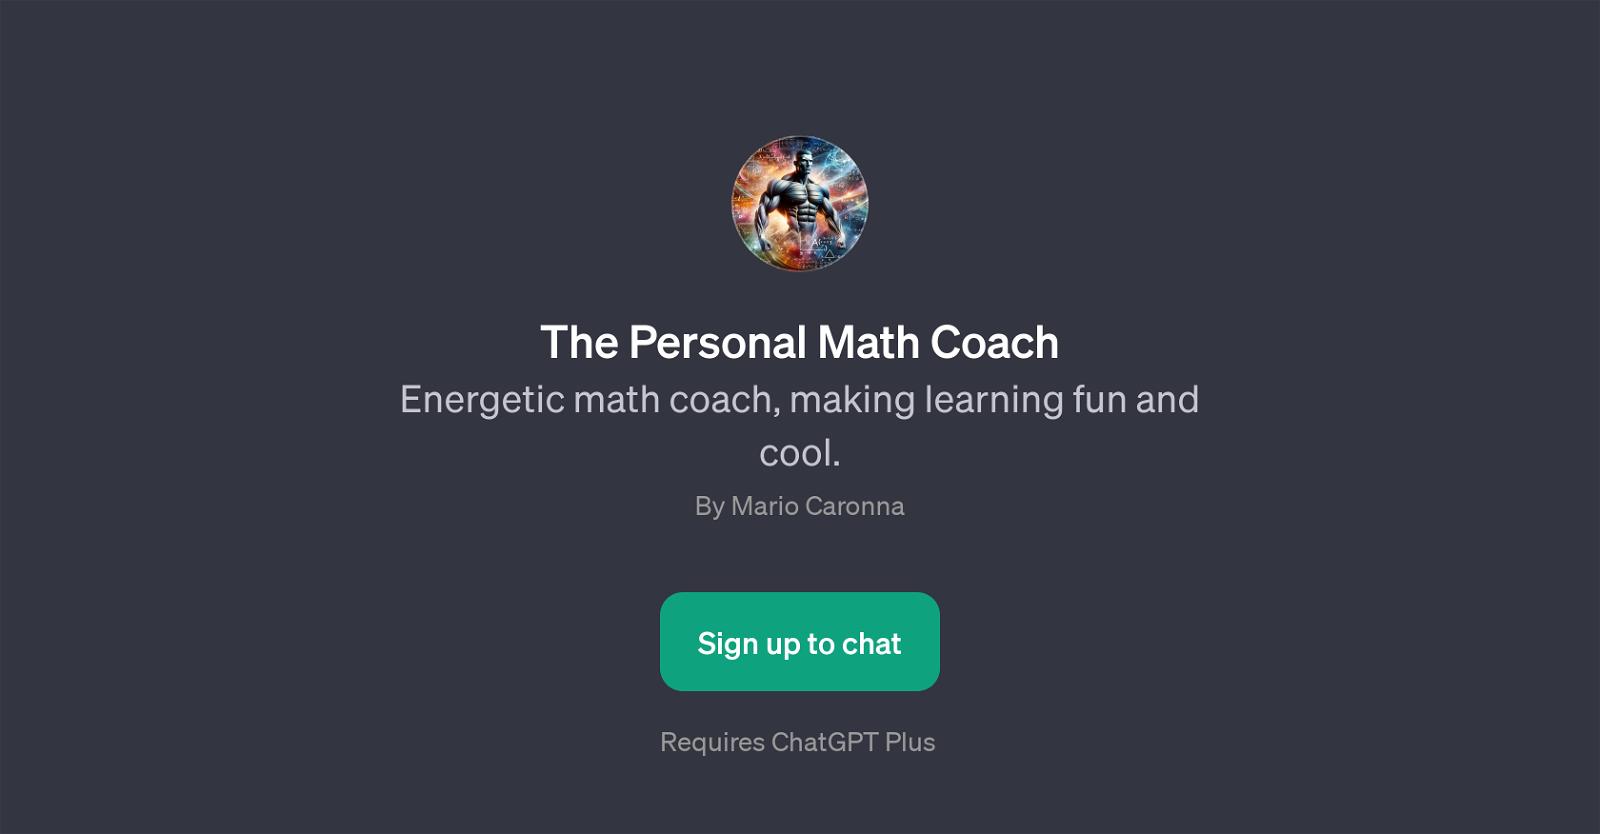 The Personal Math Coach website